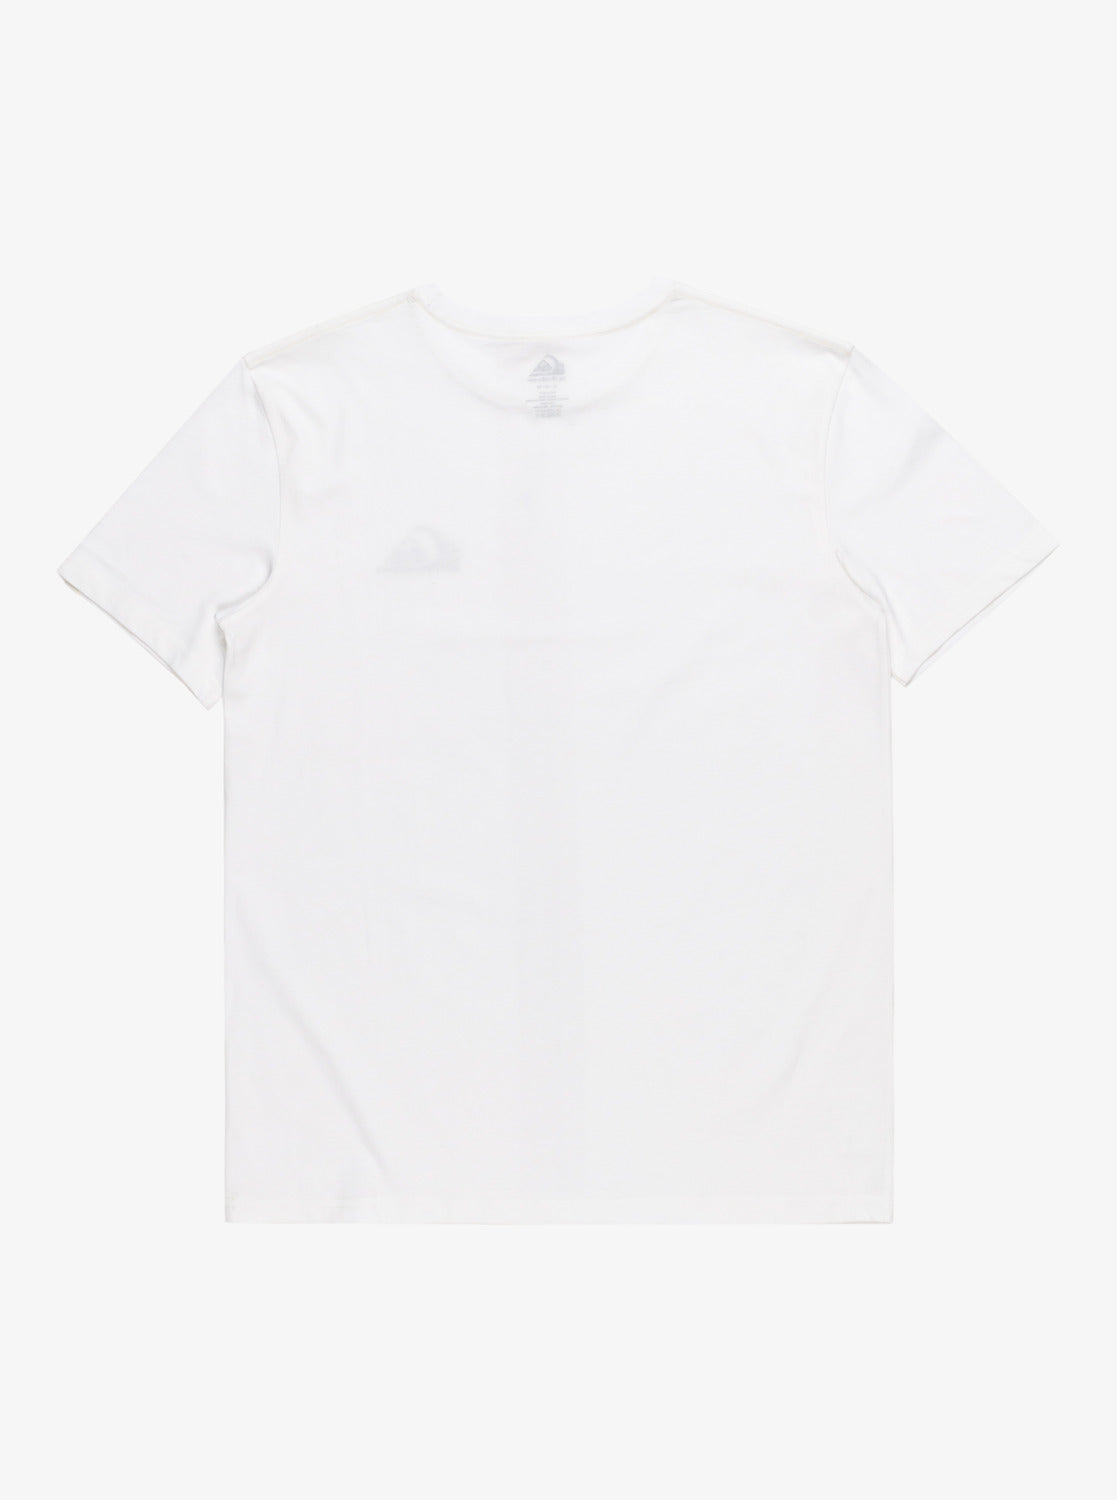  Mini - T-Shirt for Men  EQYZT07657; Mini - T-Shirt for Men  EQYZT07657;;;;;;;;